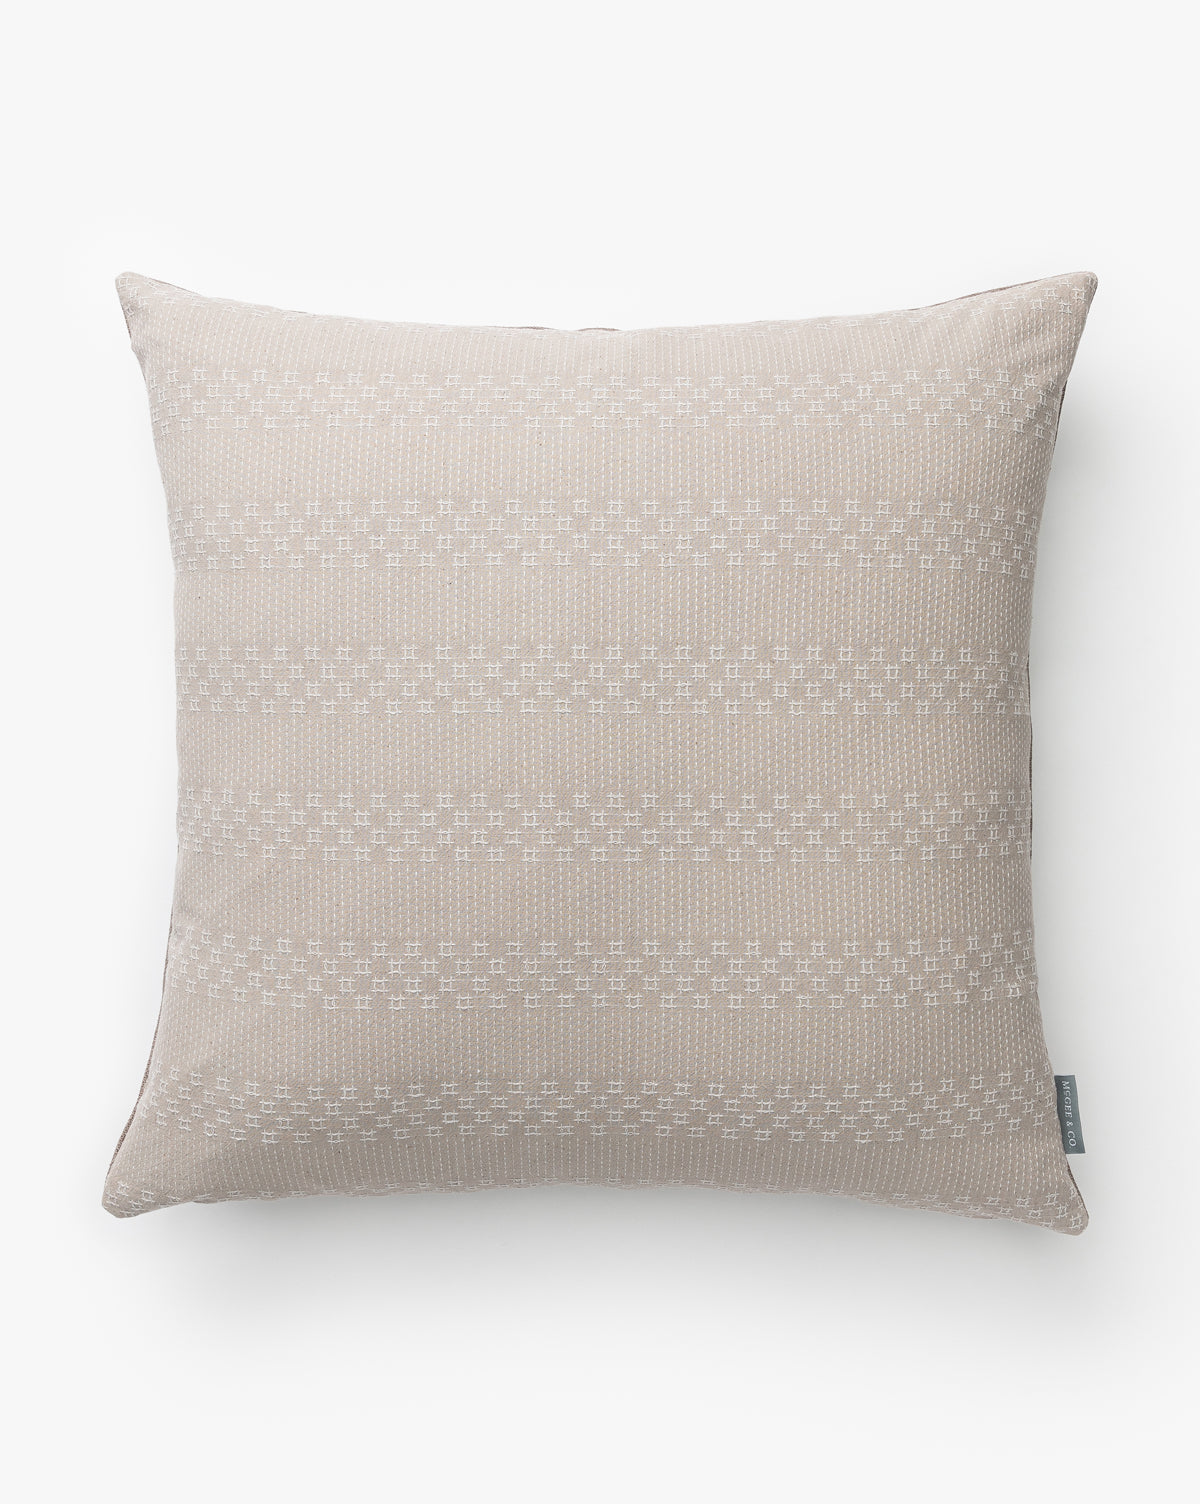 Tangren, Vintage Gray Crosshatch Pillow Cover No. 1